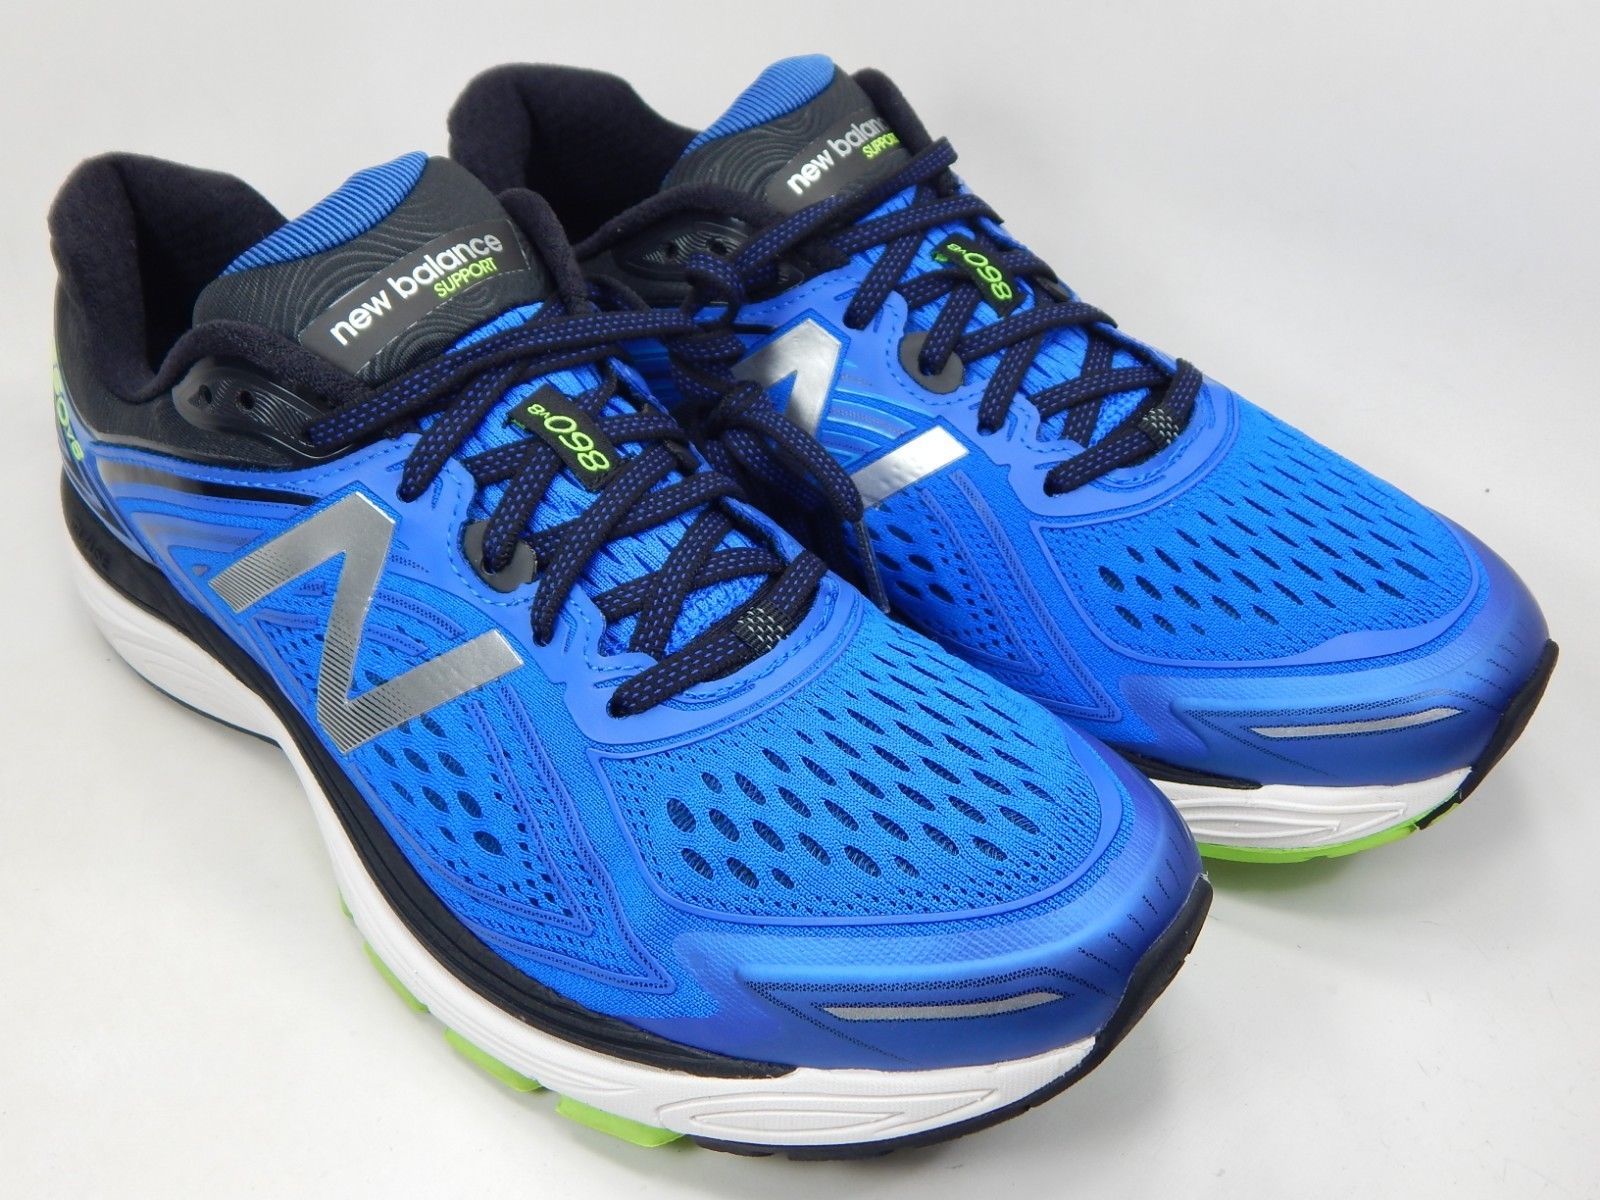 New Balance 860 v8 Size 11.5 M (D) EU 45.5 Mens Running Shoes Blue ...